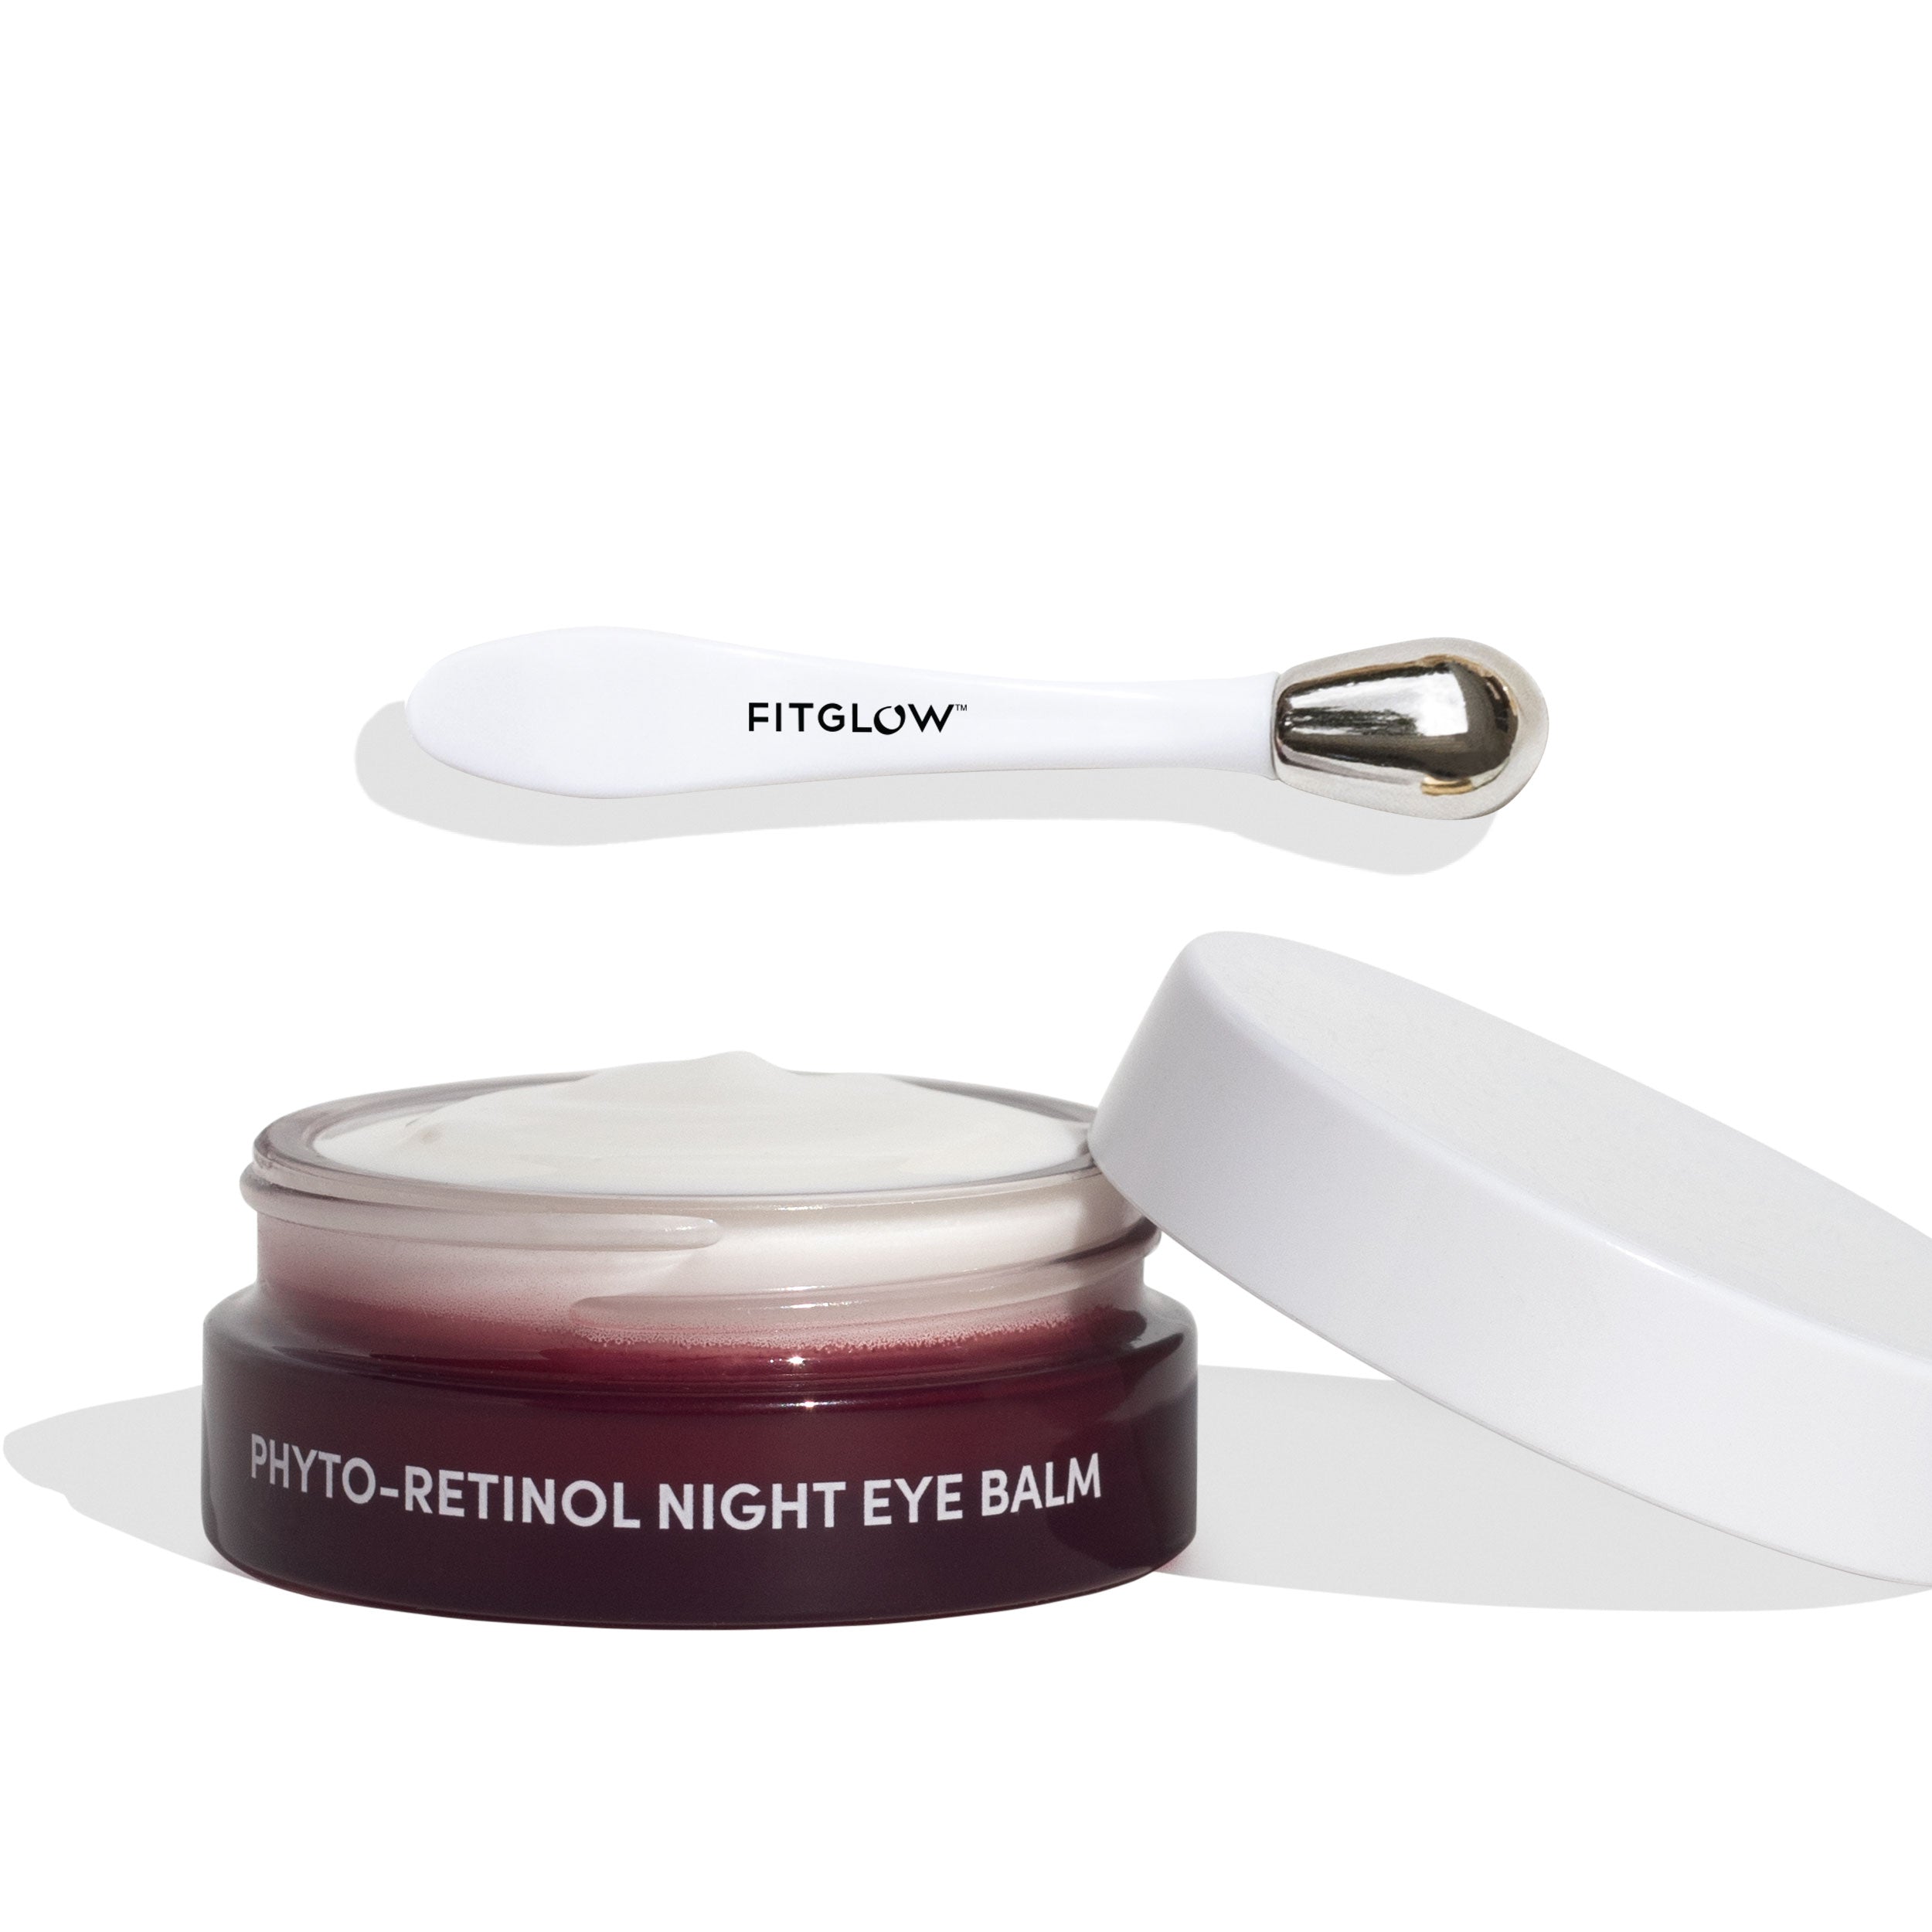 Phyto-Retinol Night Eye Balm